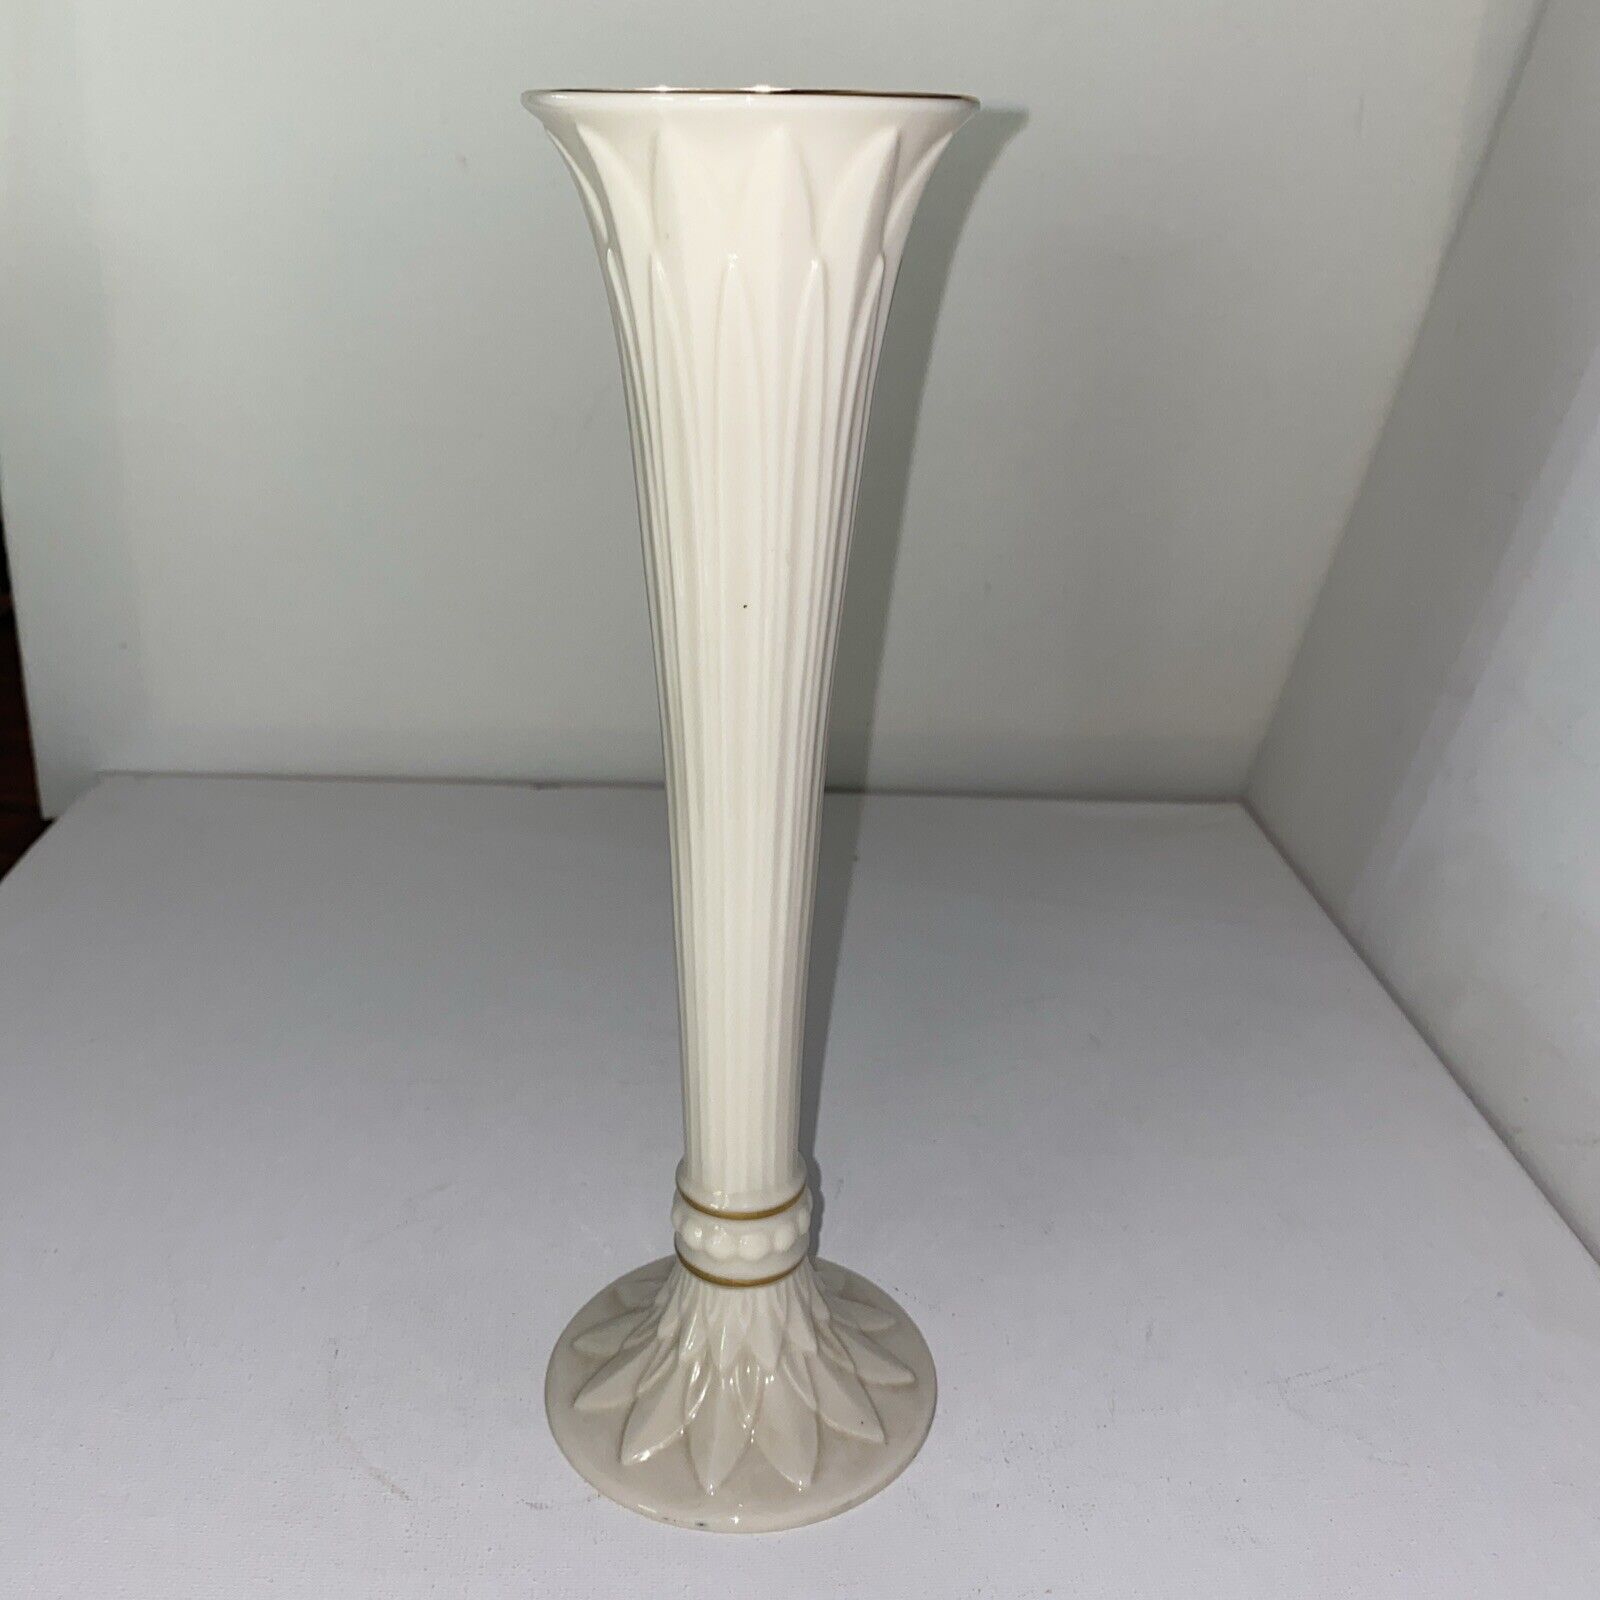 Lenox USA Porcelain 24K Gold Trim 9.25” Inch Tall Ivory Fluted Tivoli Bud Vase